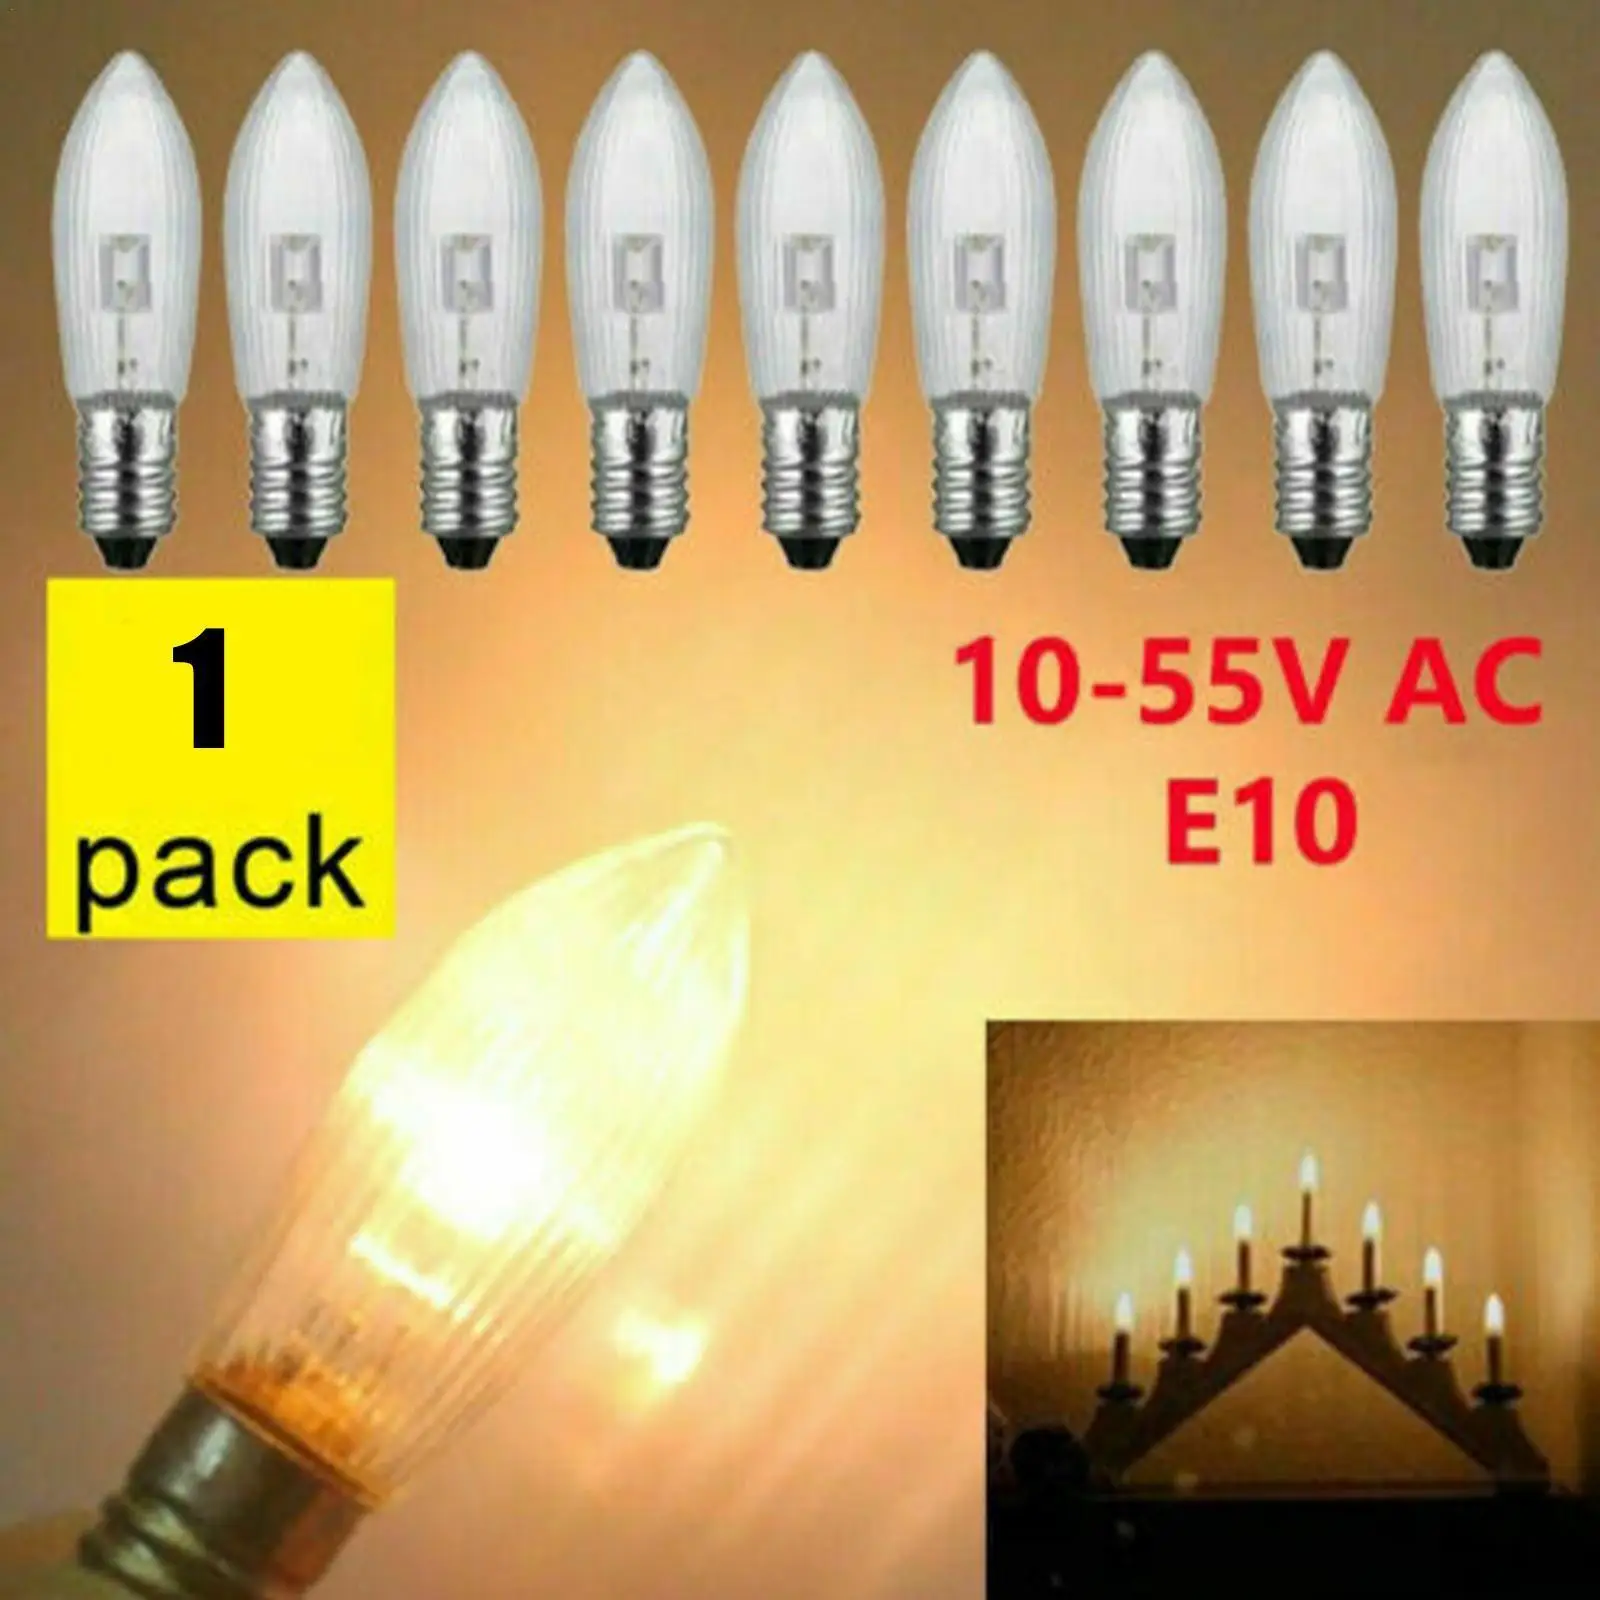 

1Pcs E10 LED Bulbs Light Replacement Lamp Bulbs For Light Chains 10V-55V AC Bathroom Kitchen Home Lamps Bulb Decoration Lig O1K7